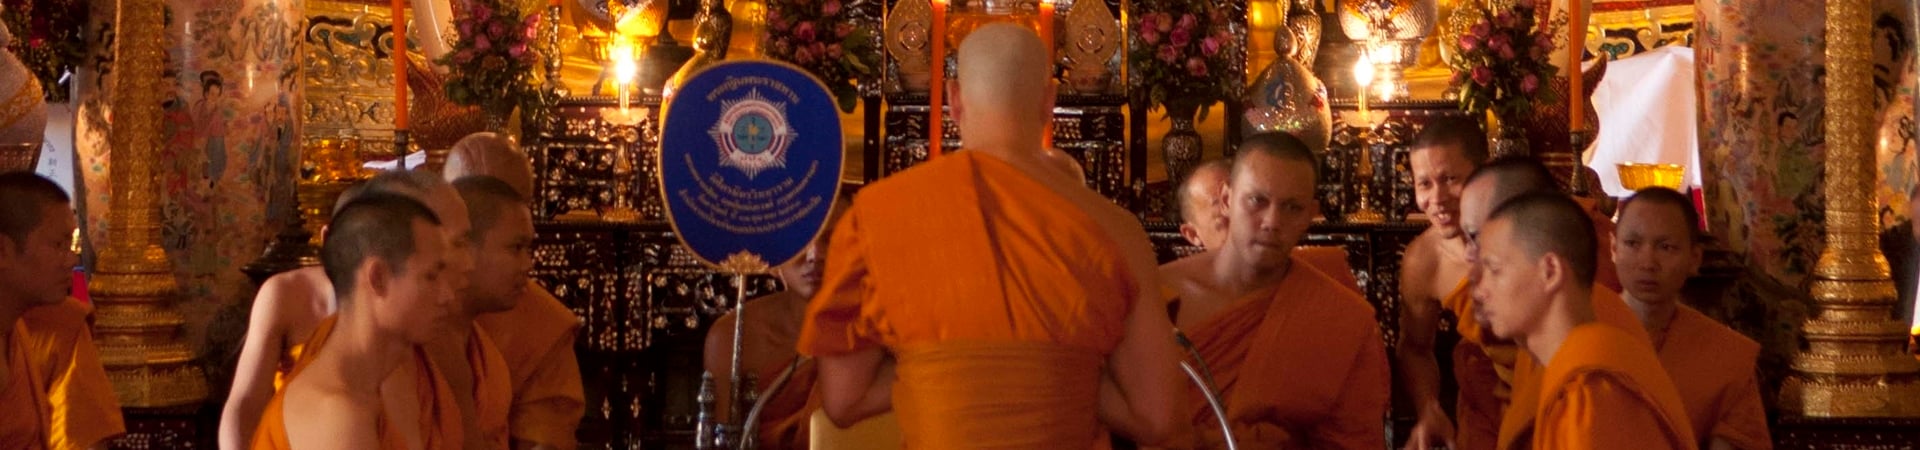 Image of Chiang Mai’s Spiritual Side